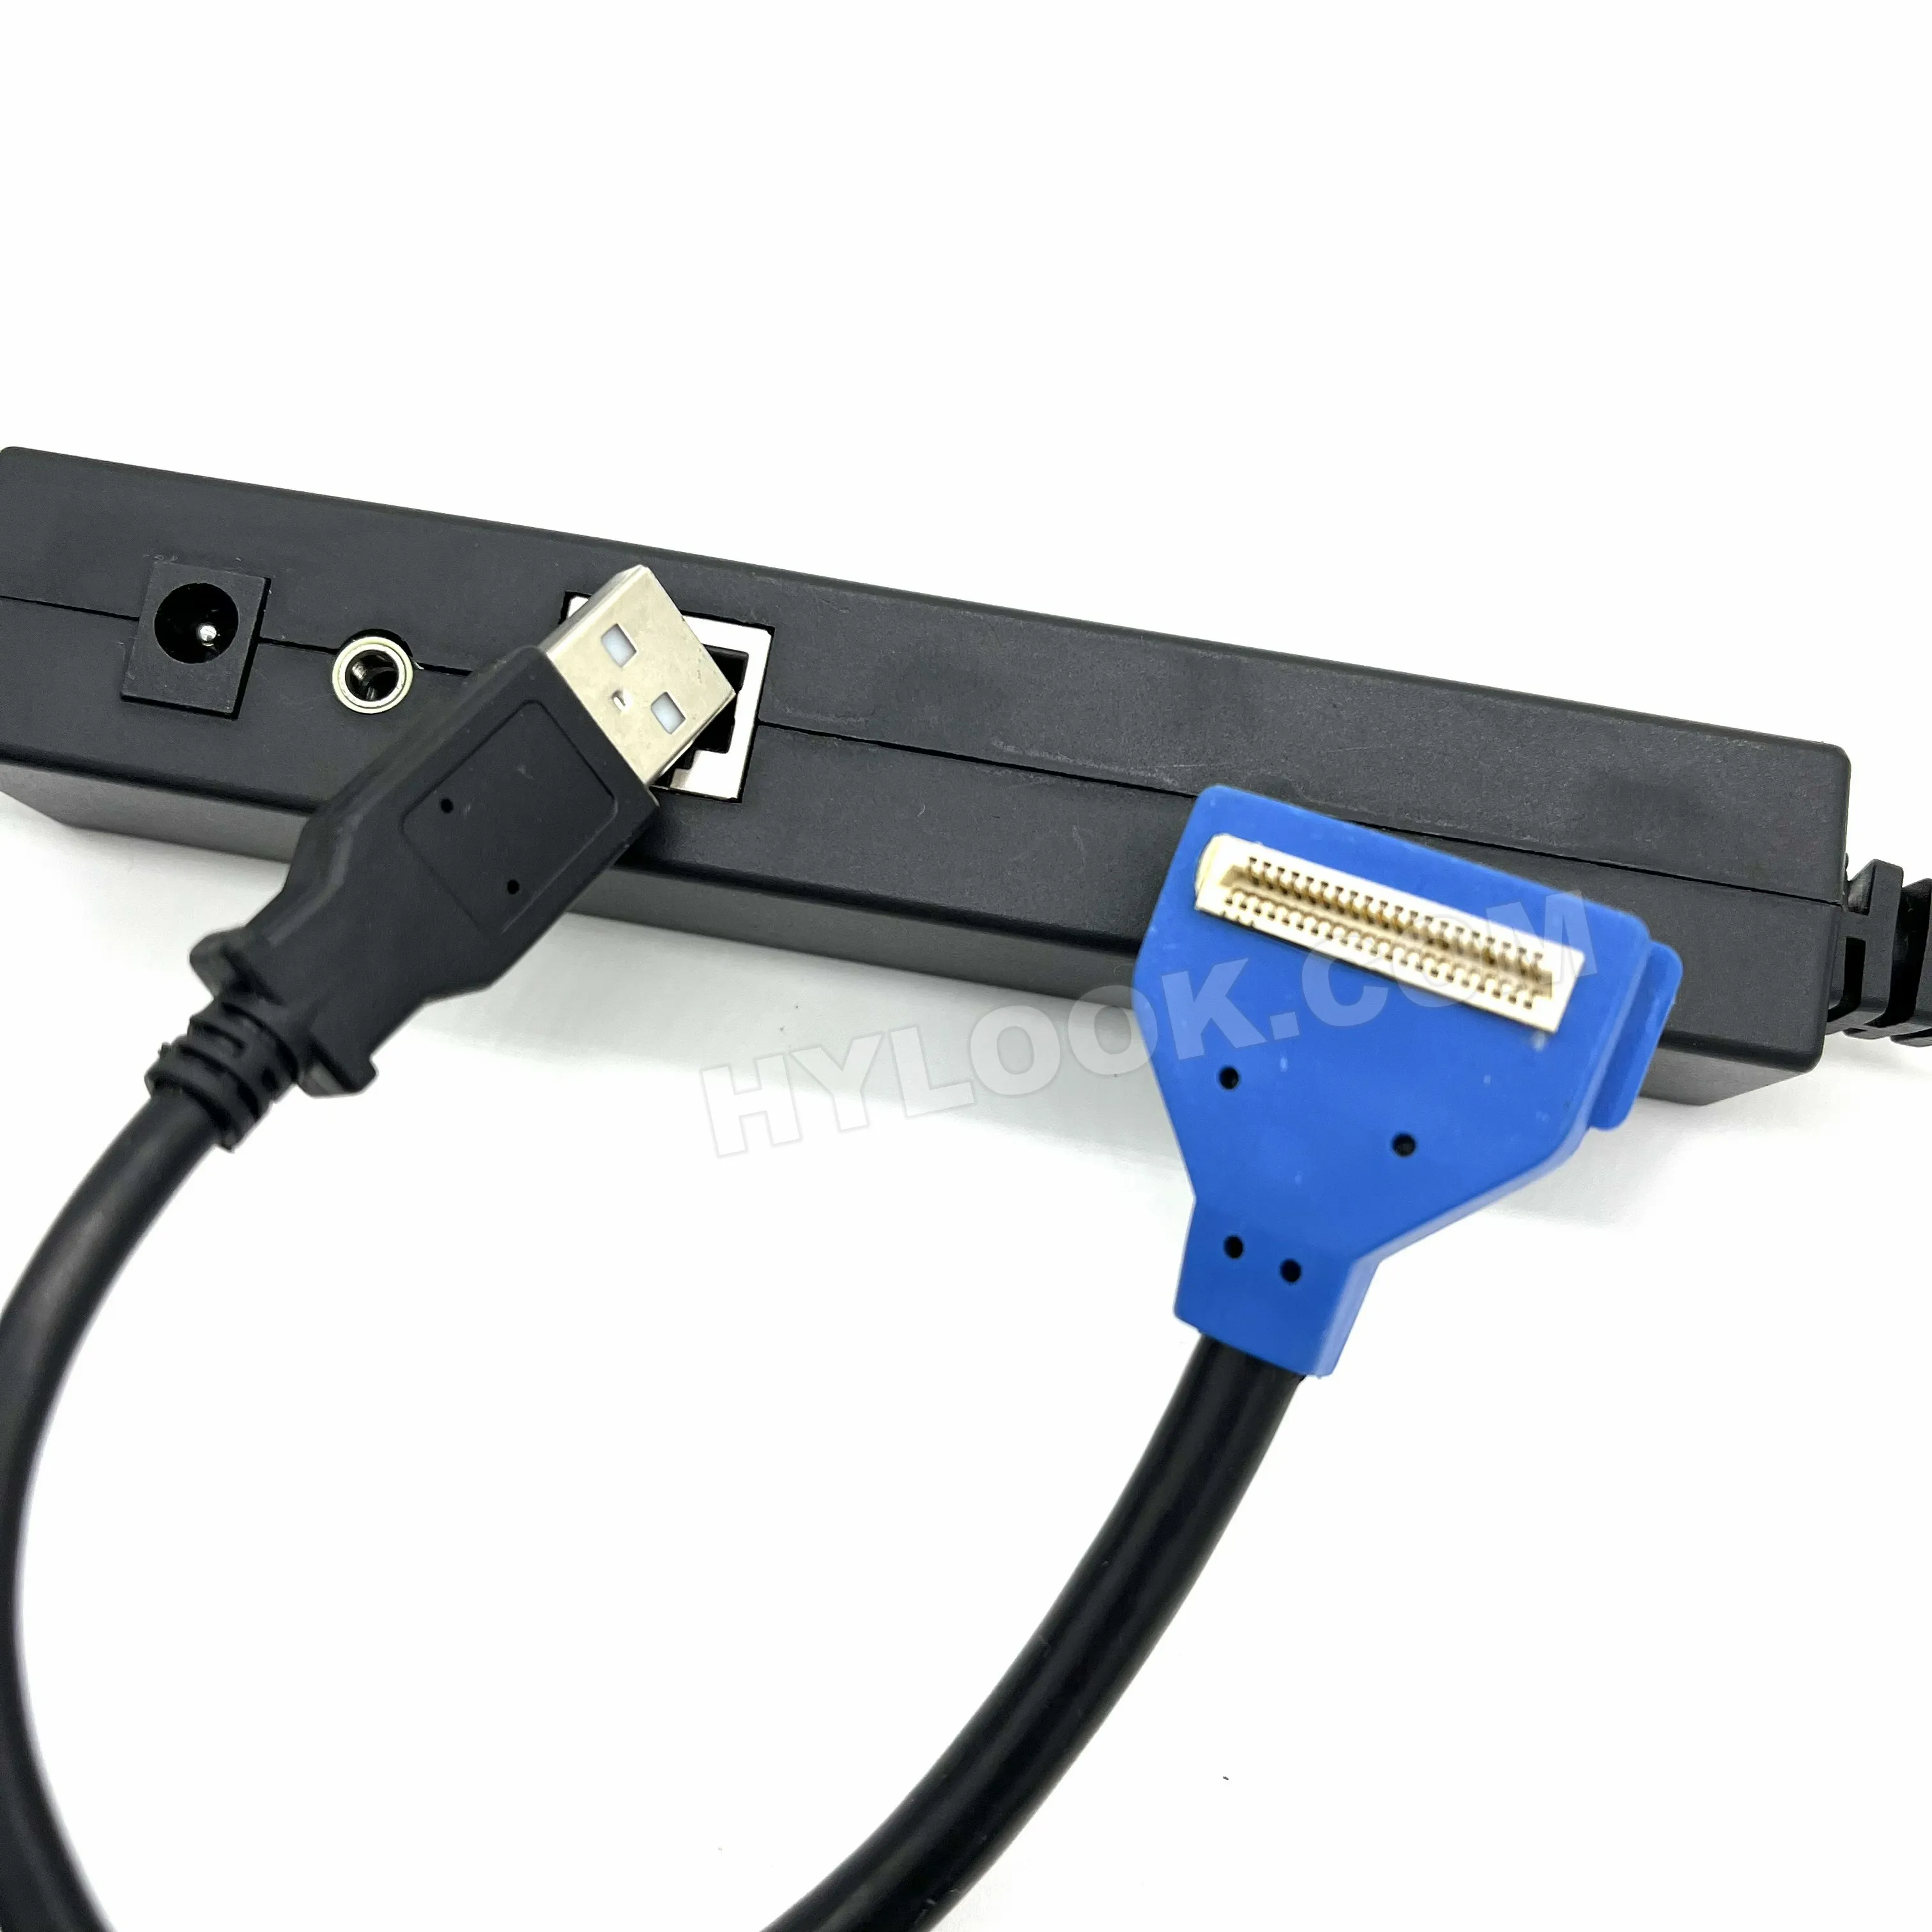 VeriFone 23741-02-R USB Cable Blue for Verifone Mx830 Mx860 Mx870